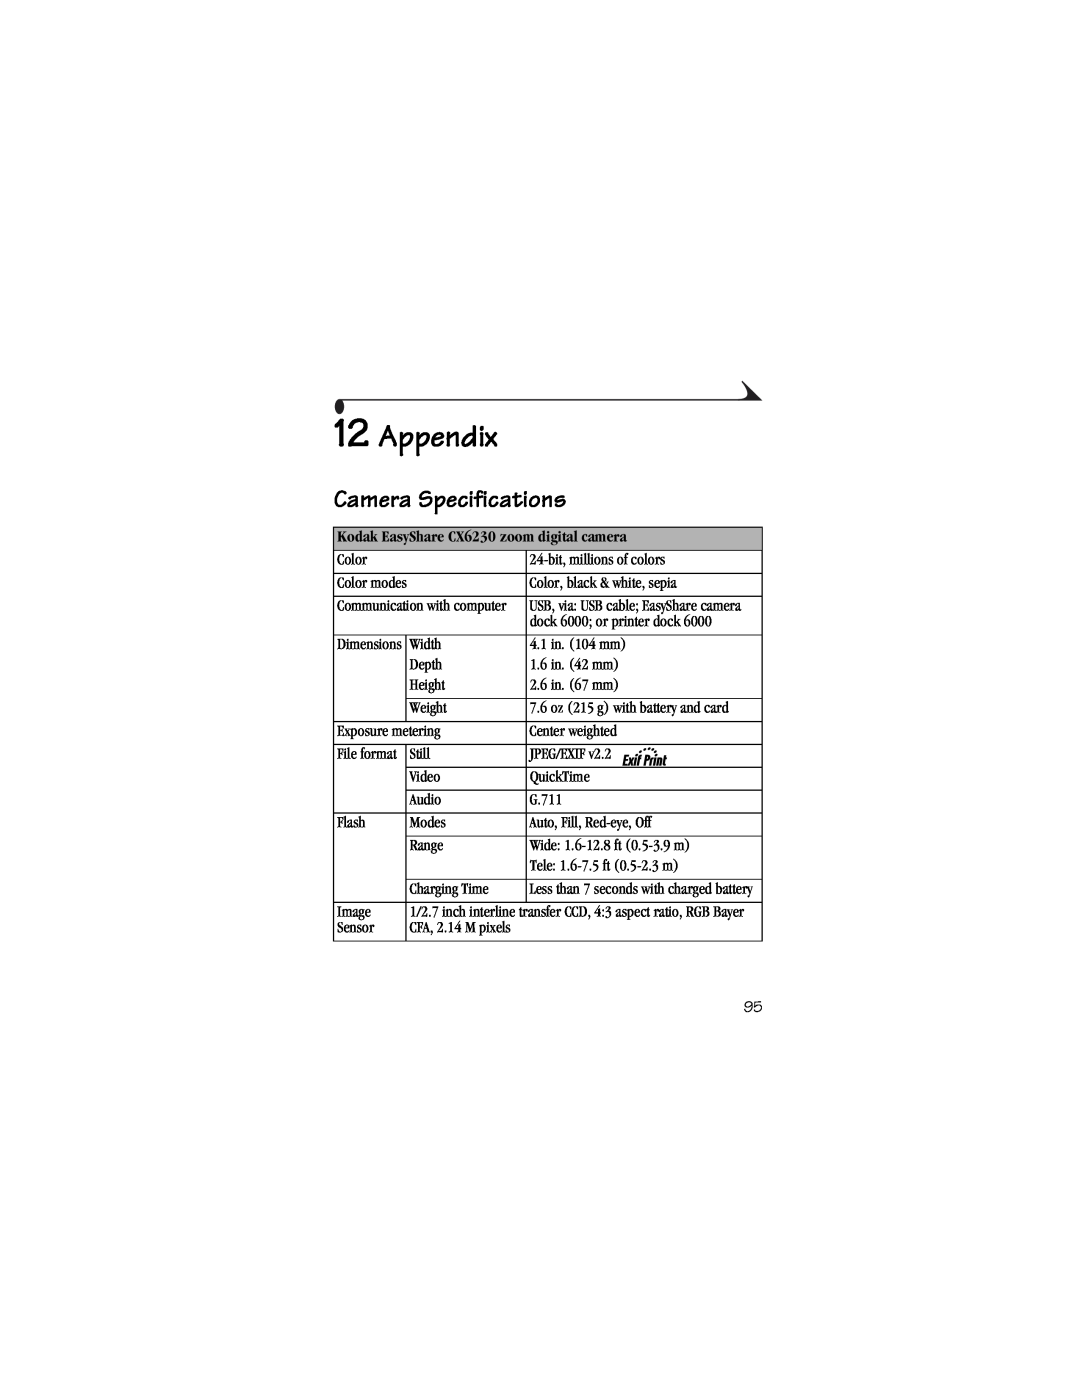 Kodak manual Appendix, Camera Specifications, Kodak EasyShare CX6230 zoom digital camera 